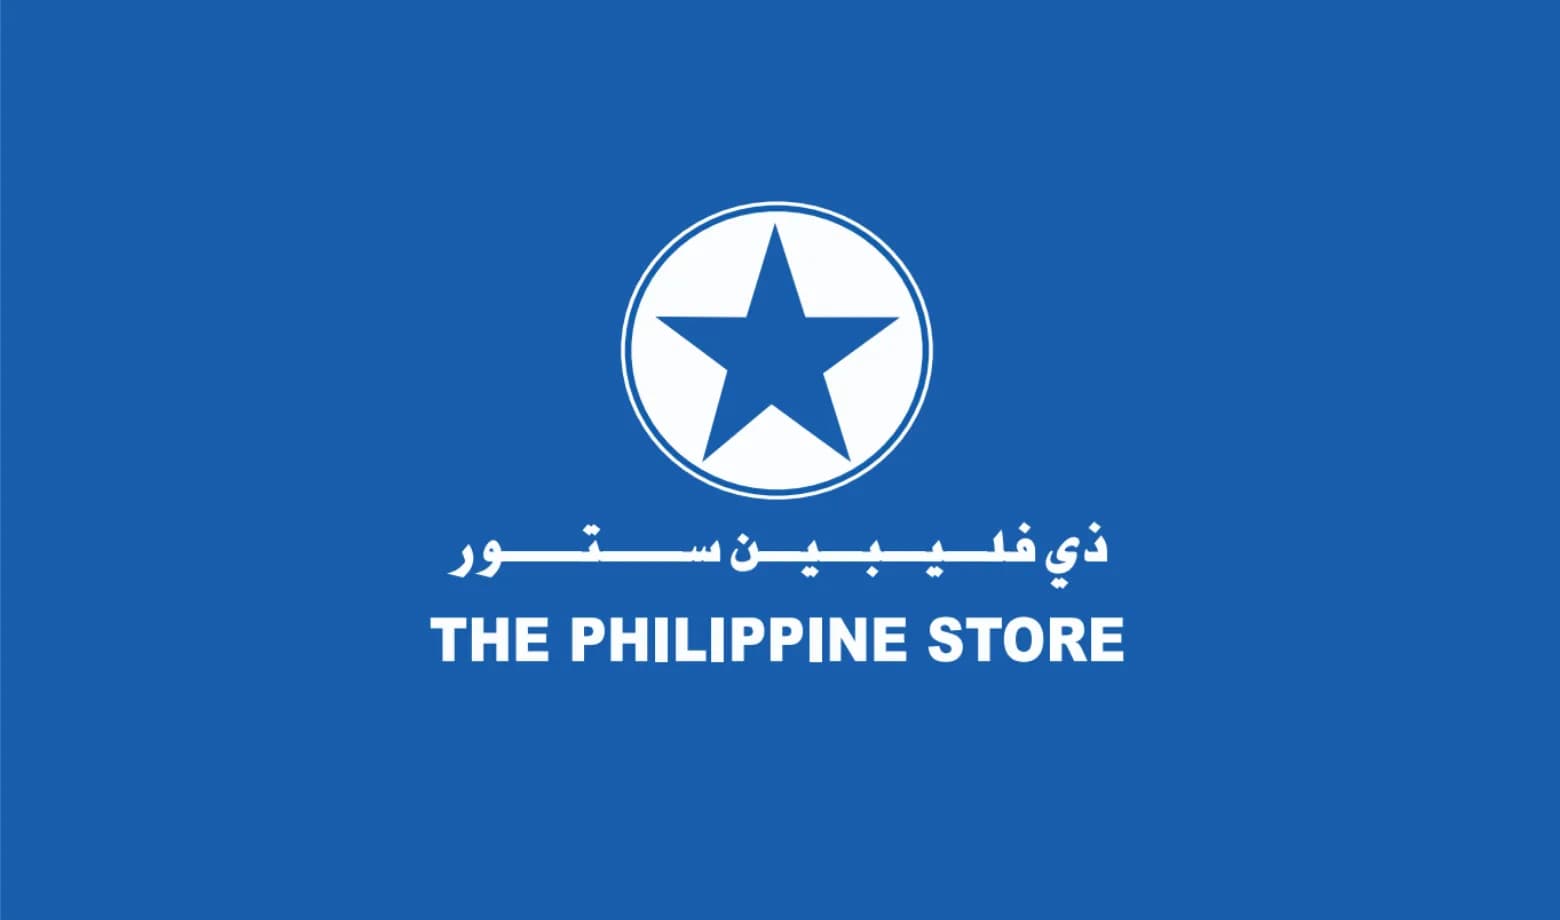 The Philippine Store